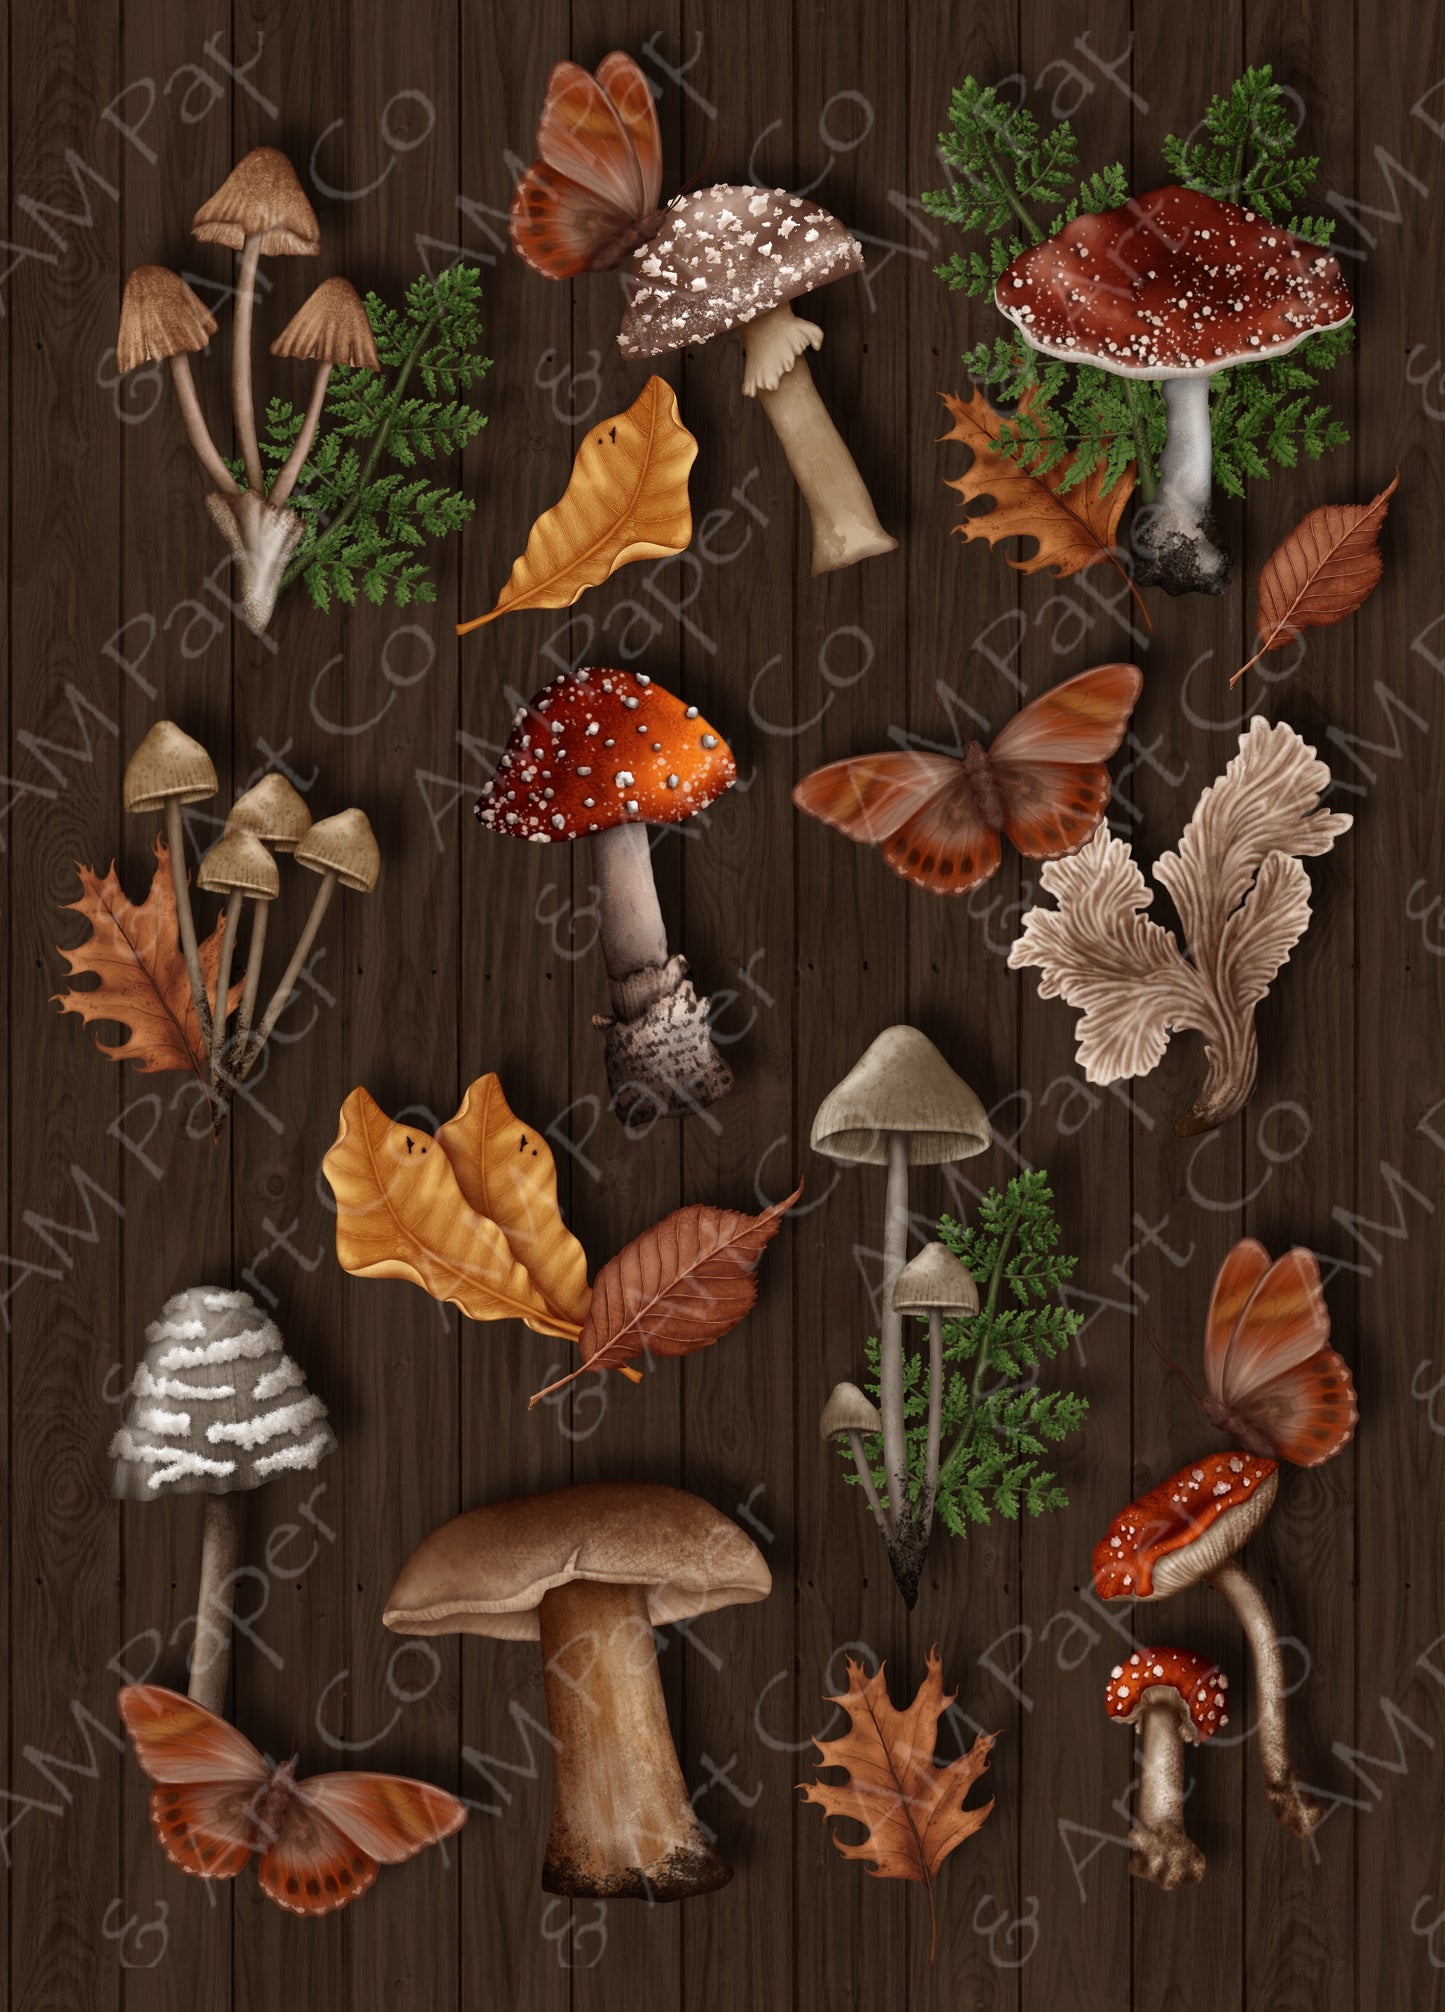 Maryann's Mushrooms Art Print/Postcard